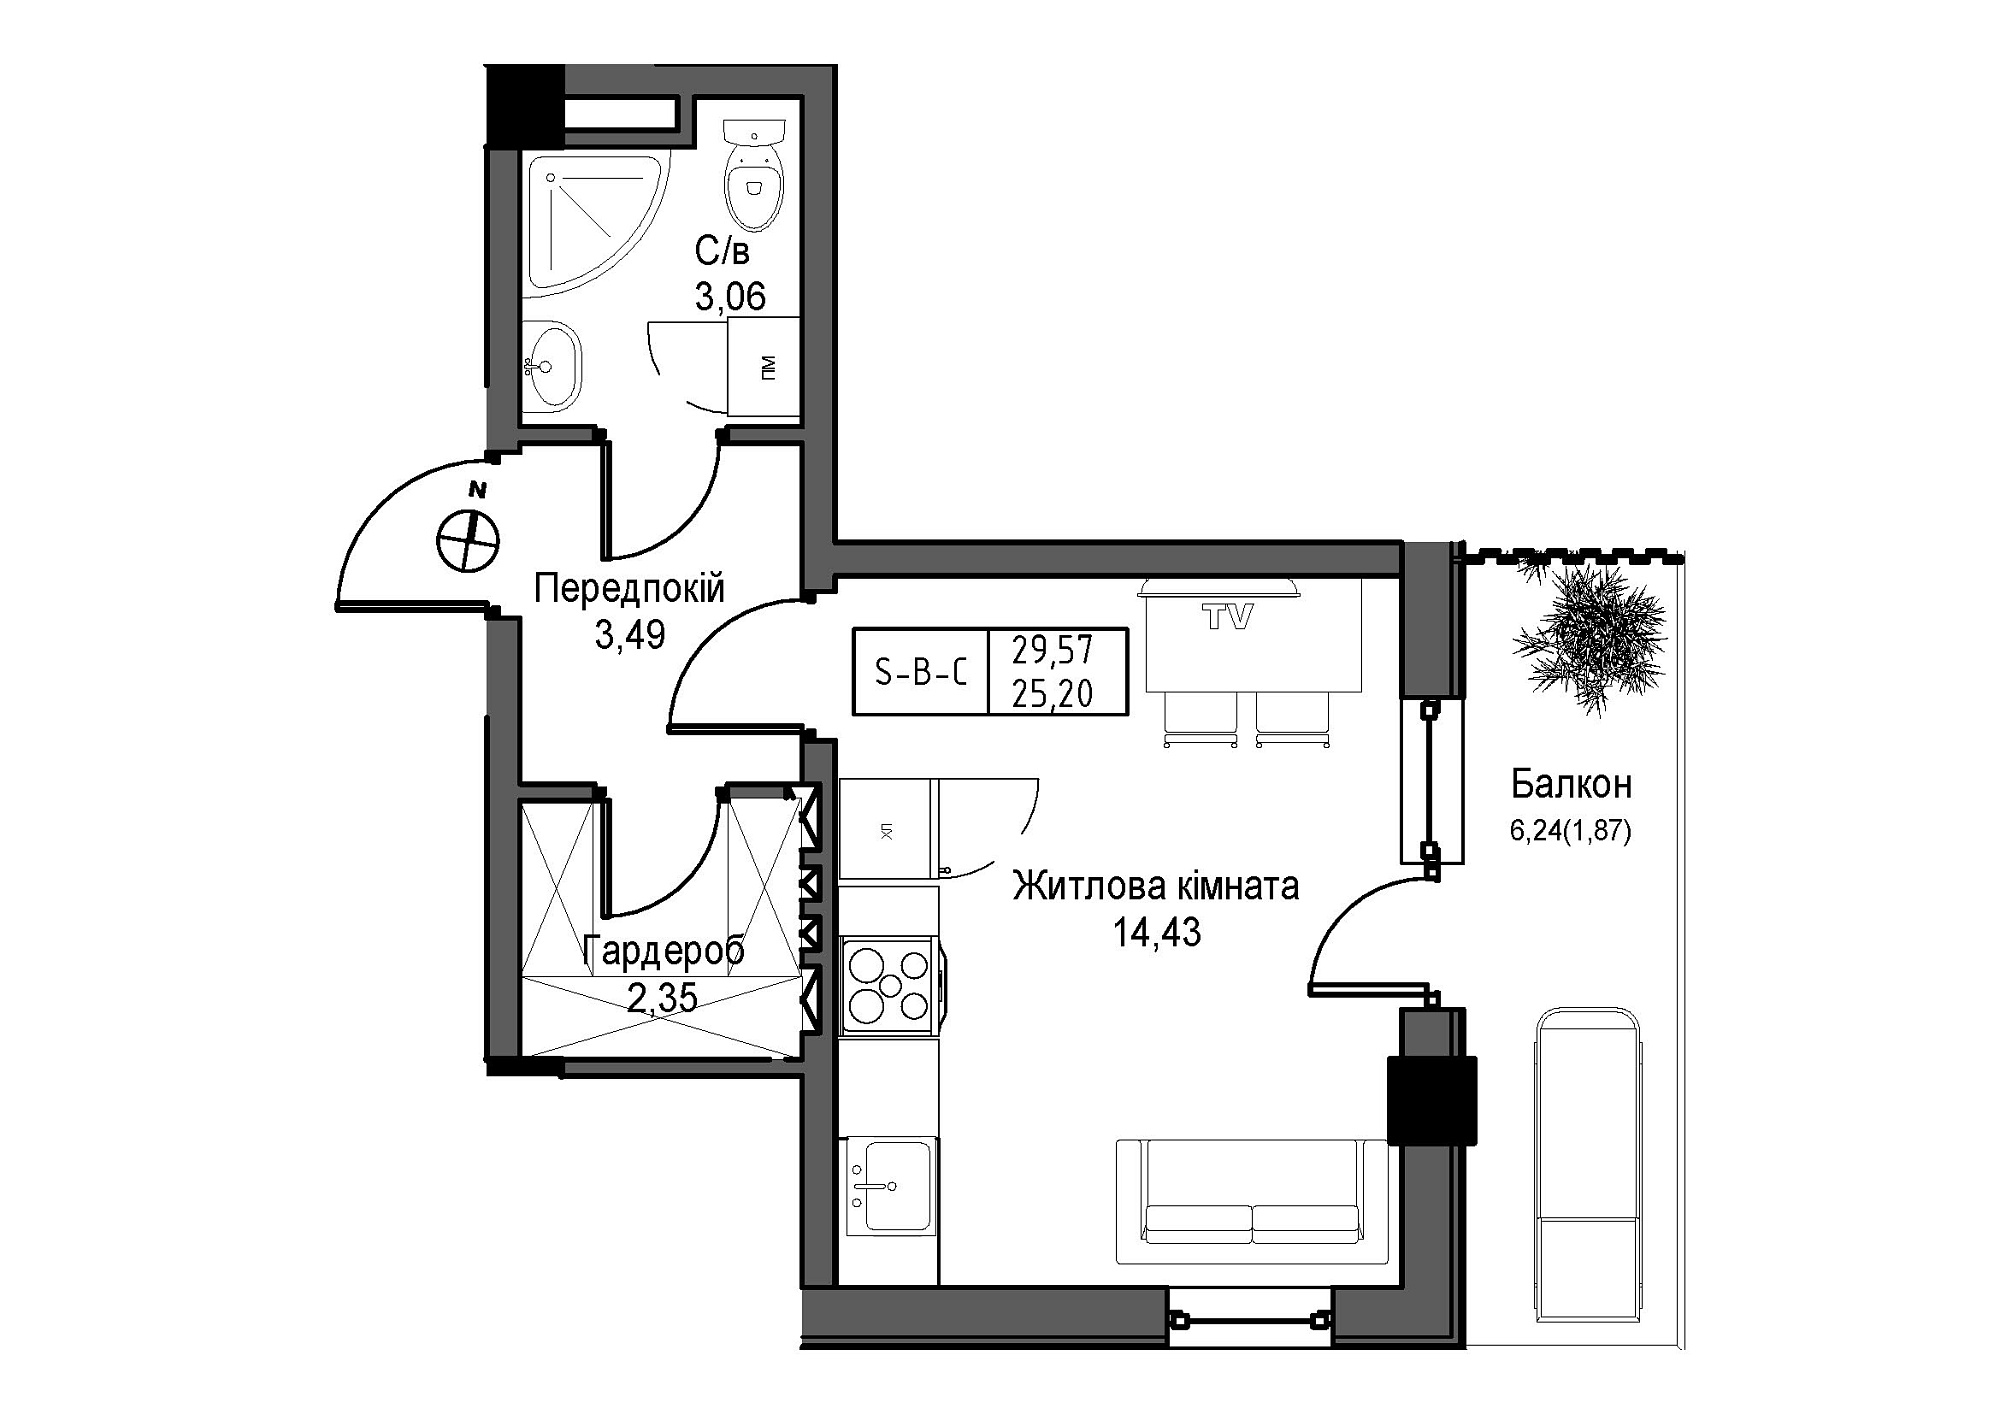 Планування Smart-квартира площею 24.81м2, UM-007-10/0008.